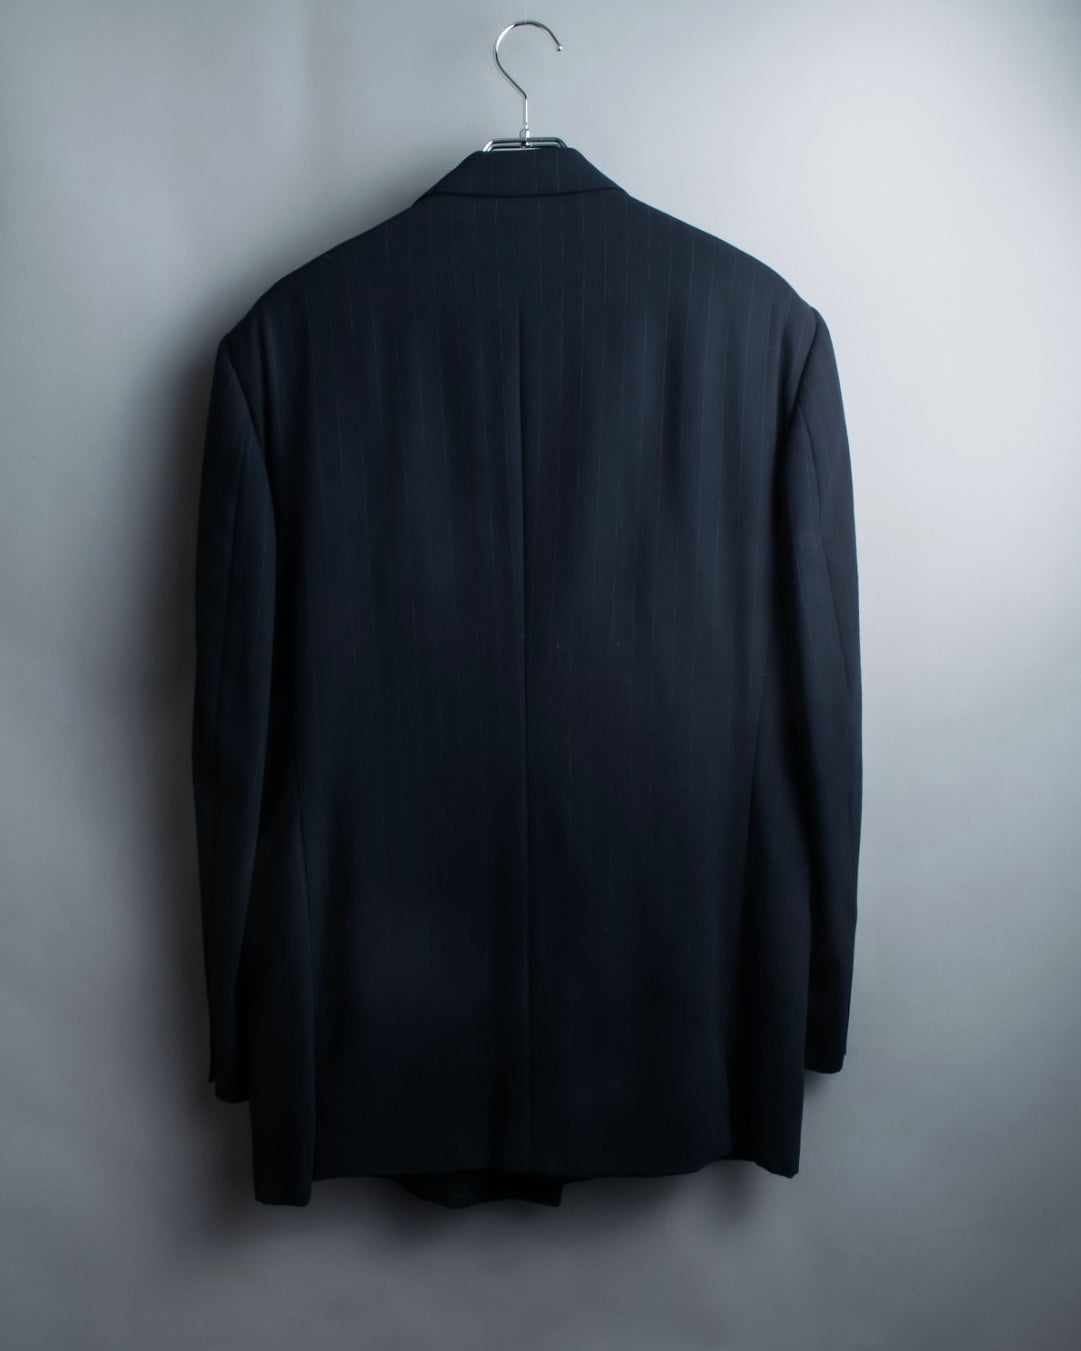 "VERSACE classic" power shoulder stripe tailored jacket setup